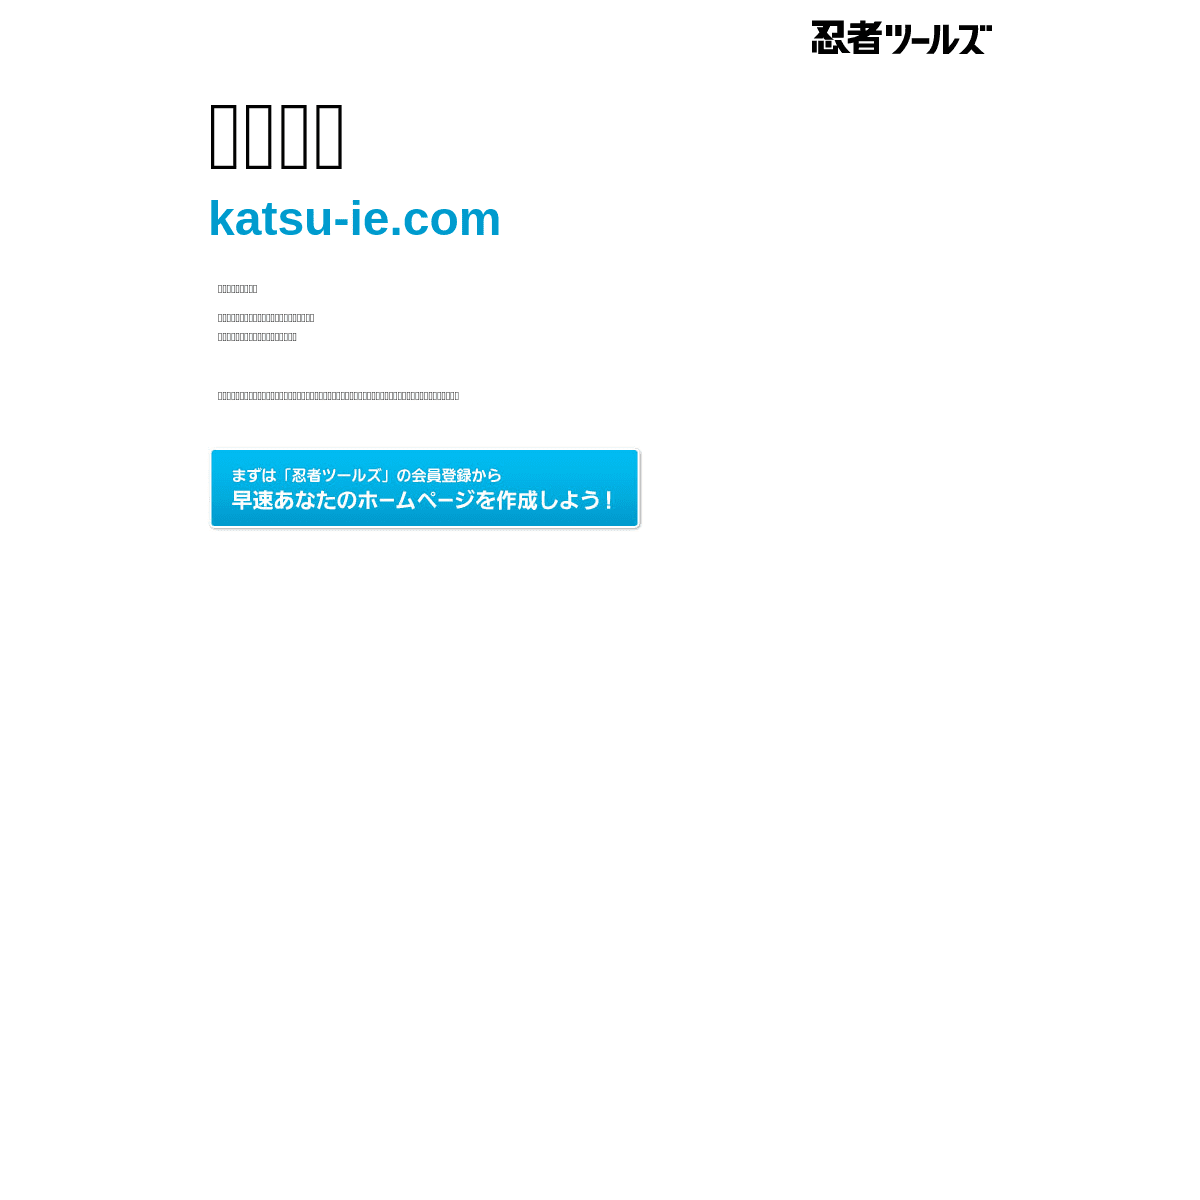 A complete backup of https://katsu-ie.com